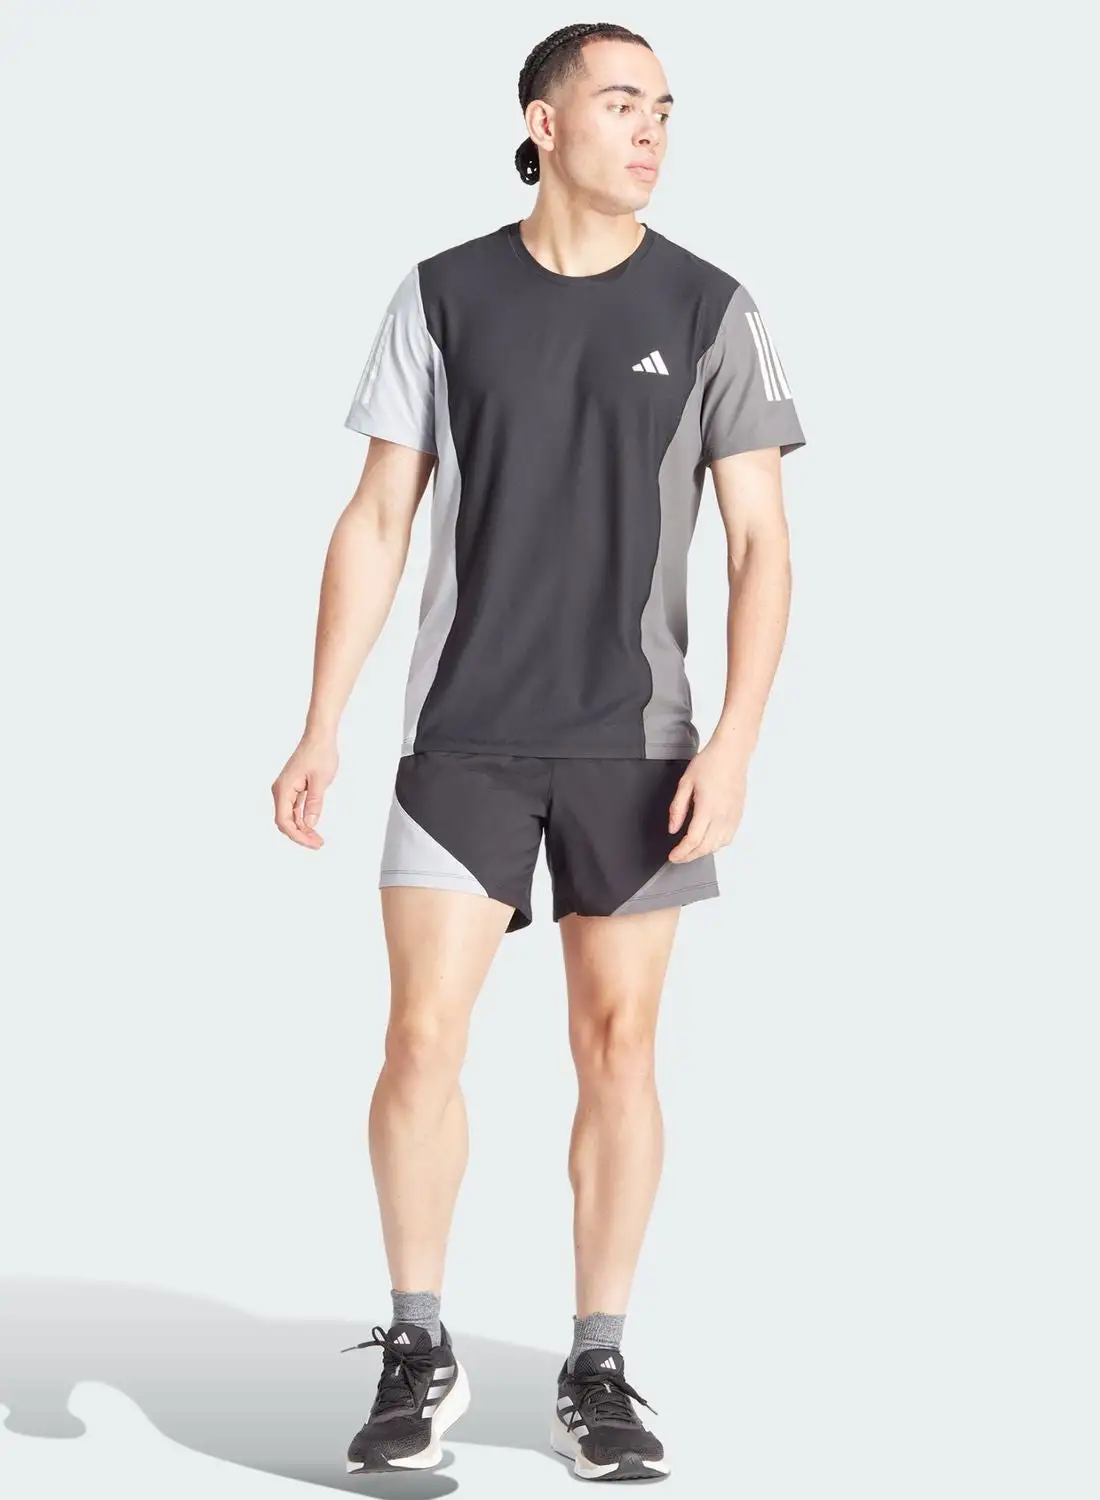 Adidas Own The Run Colorblock Shorts